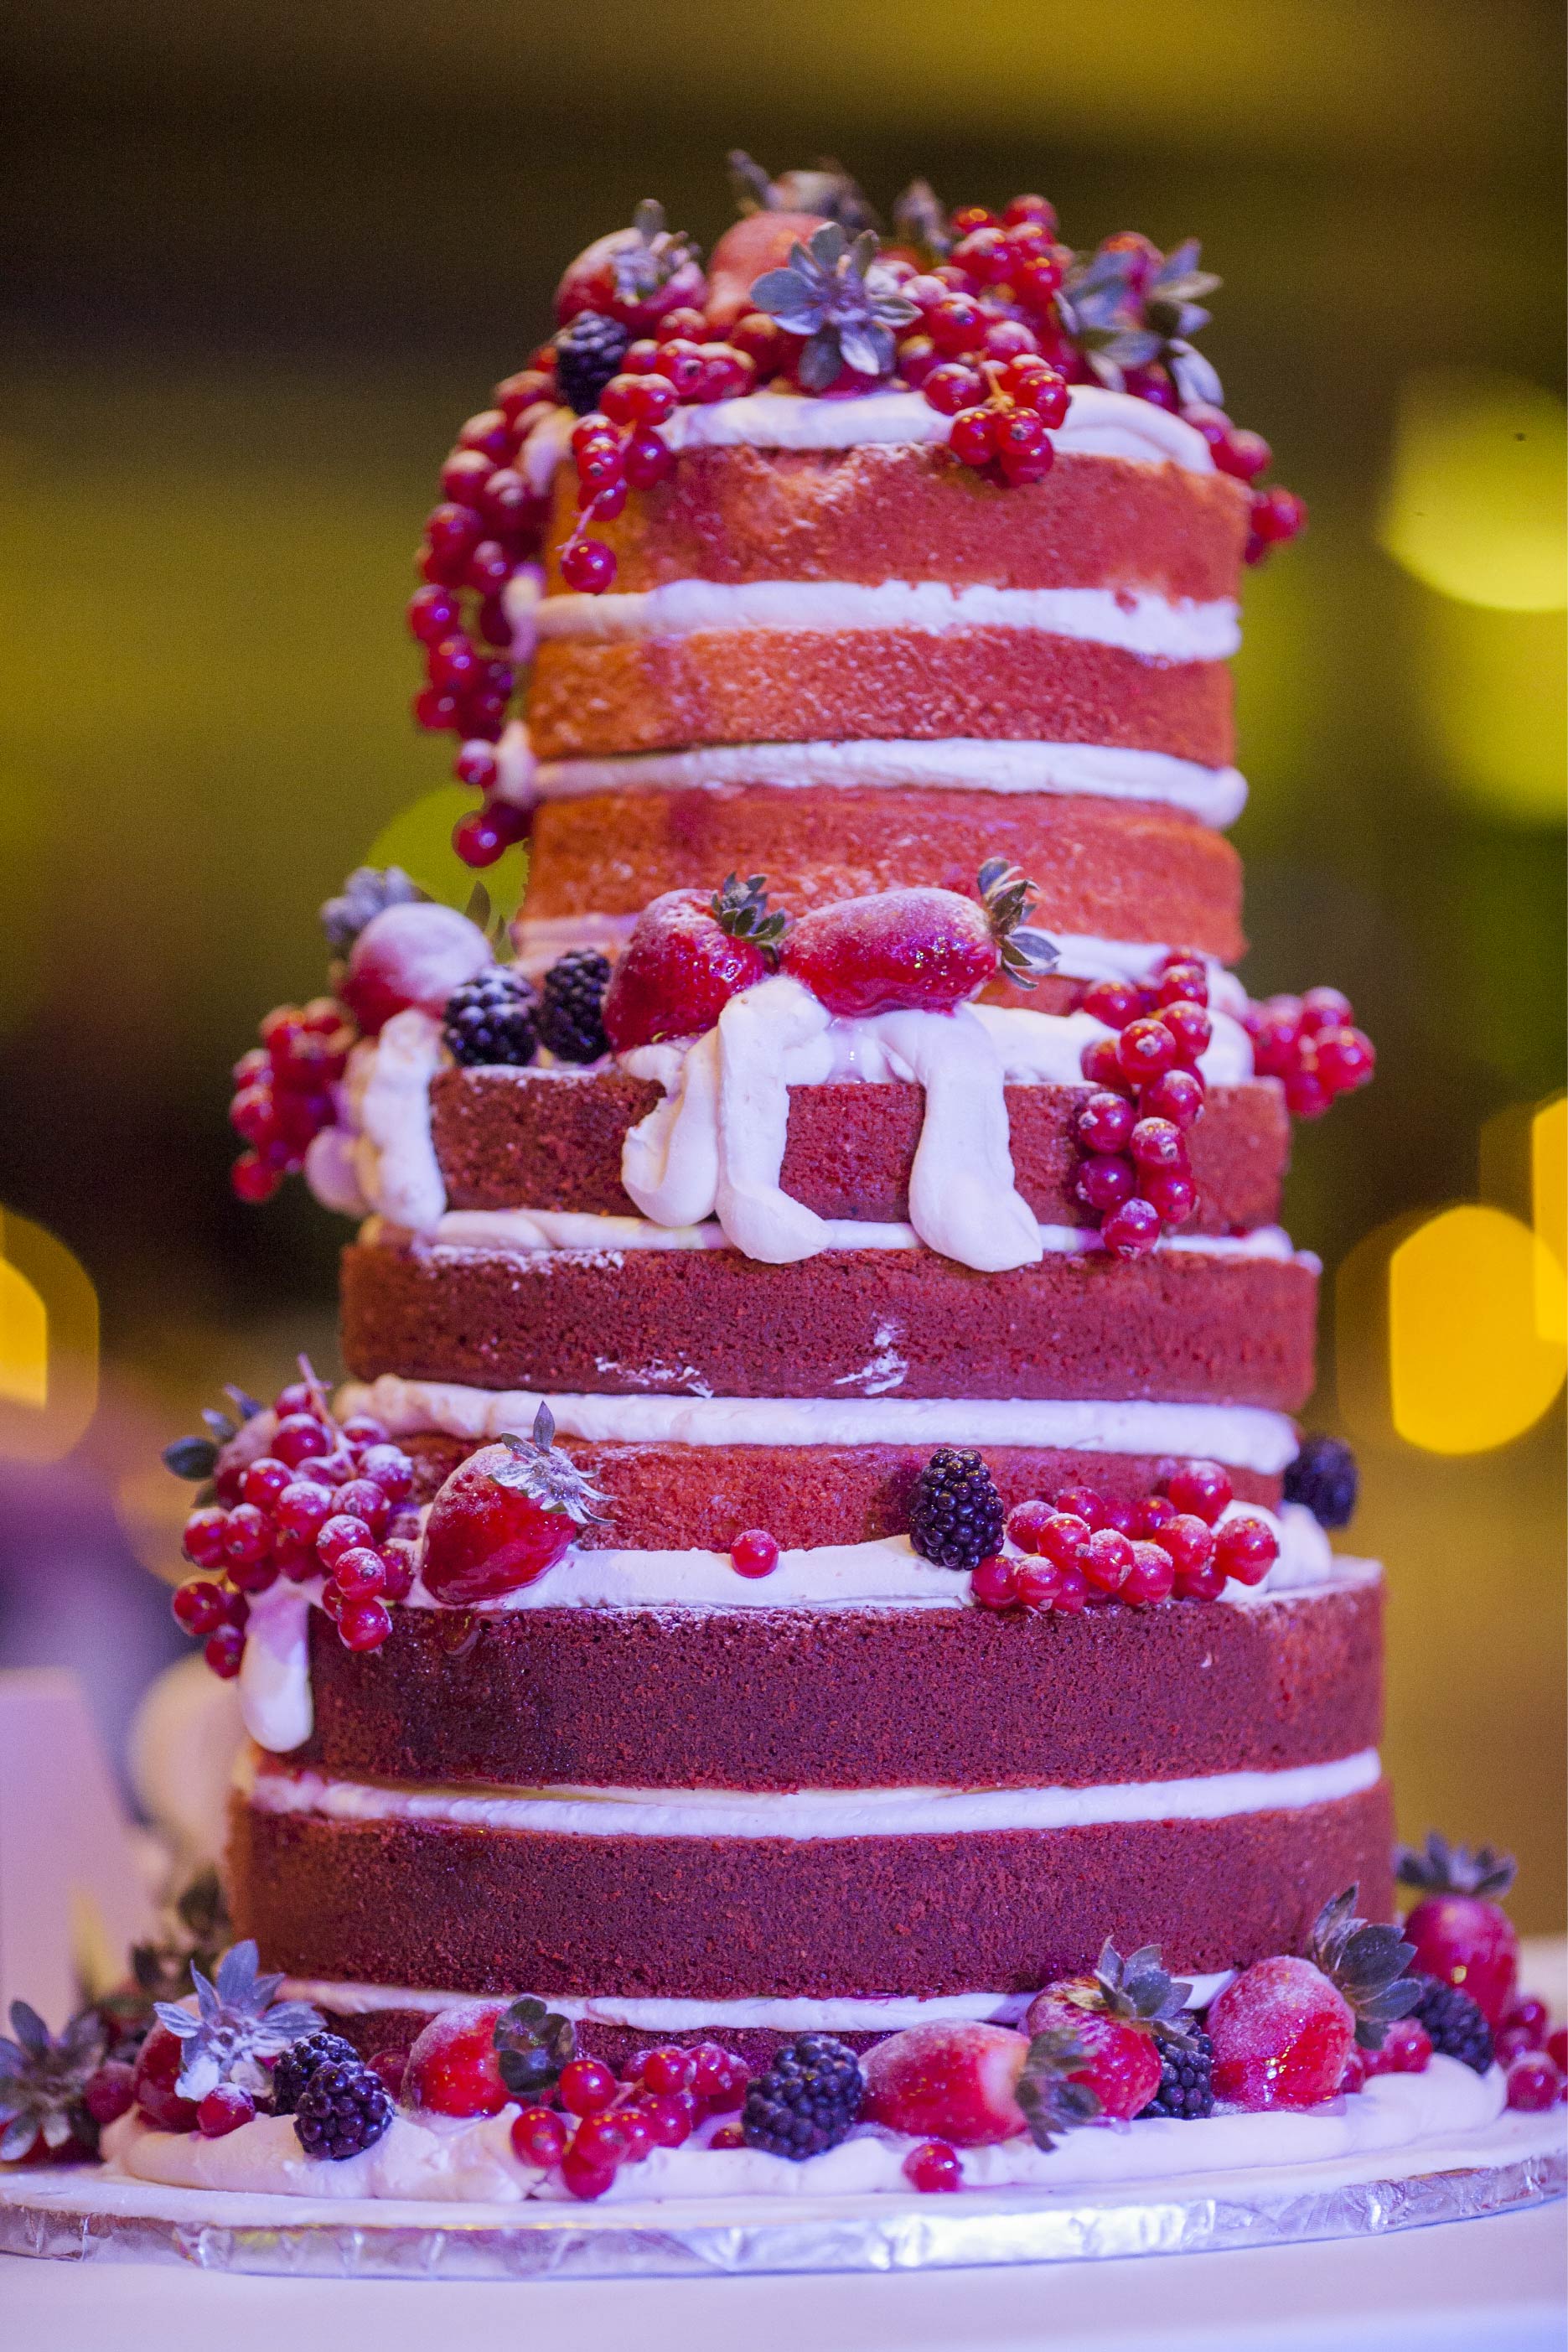 Colorful wedding cake red velvet flavor